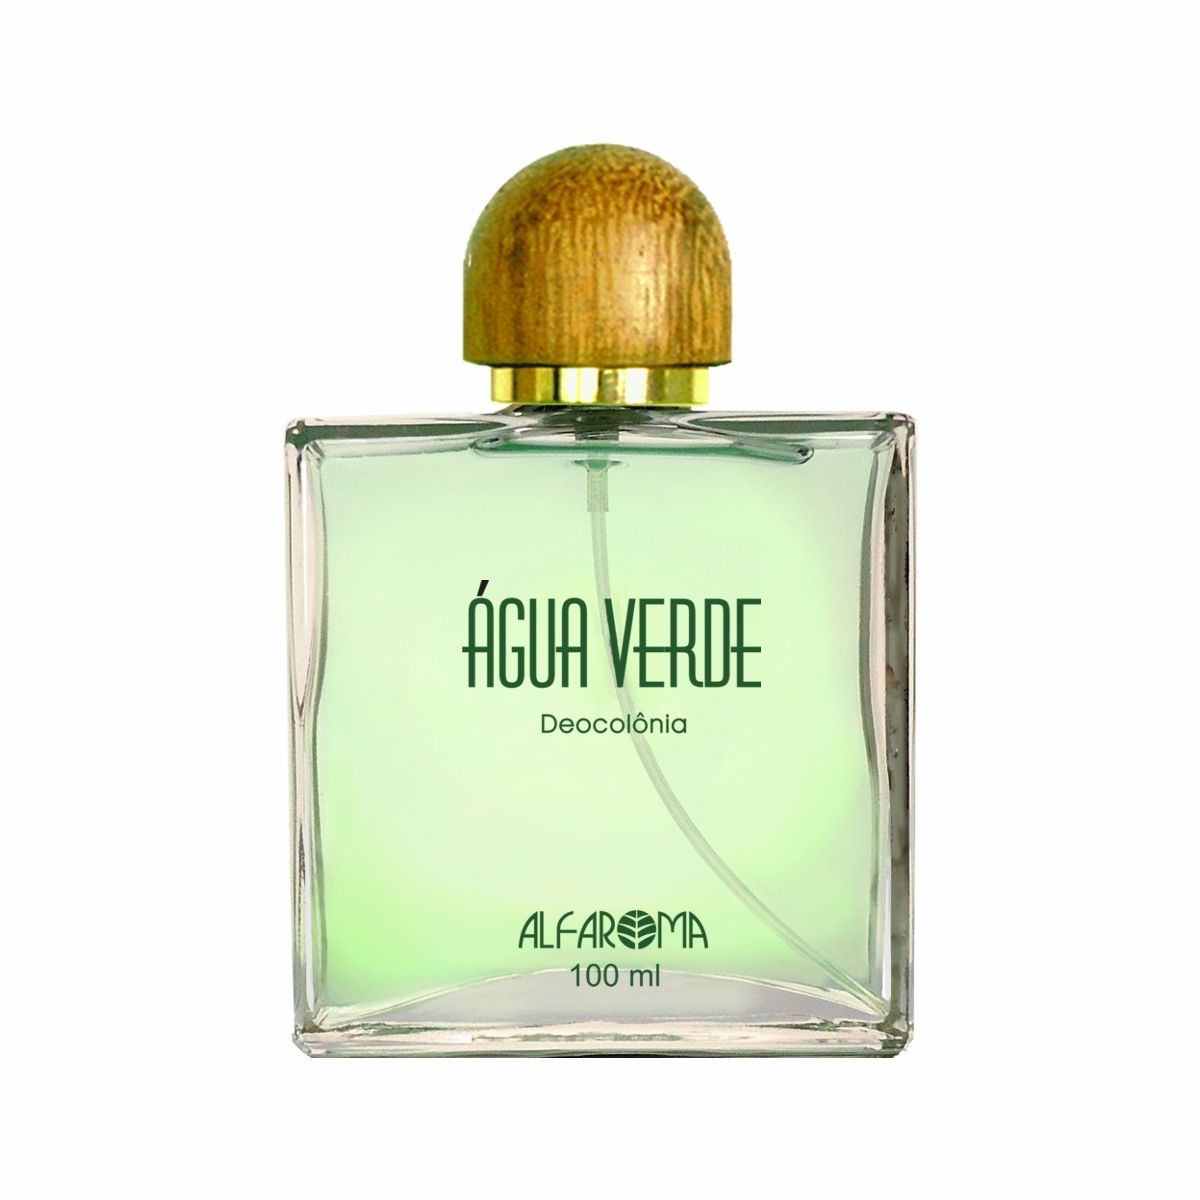 Água Verde Alfaroma perfume - a fragrance for women and men